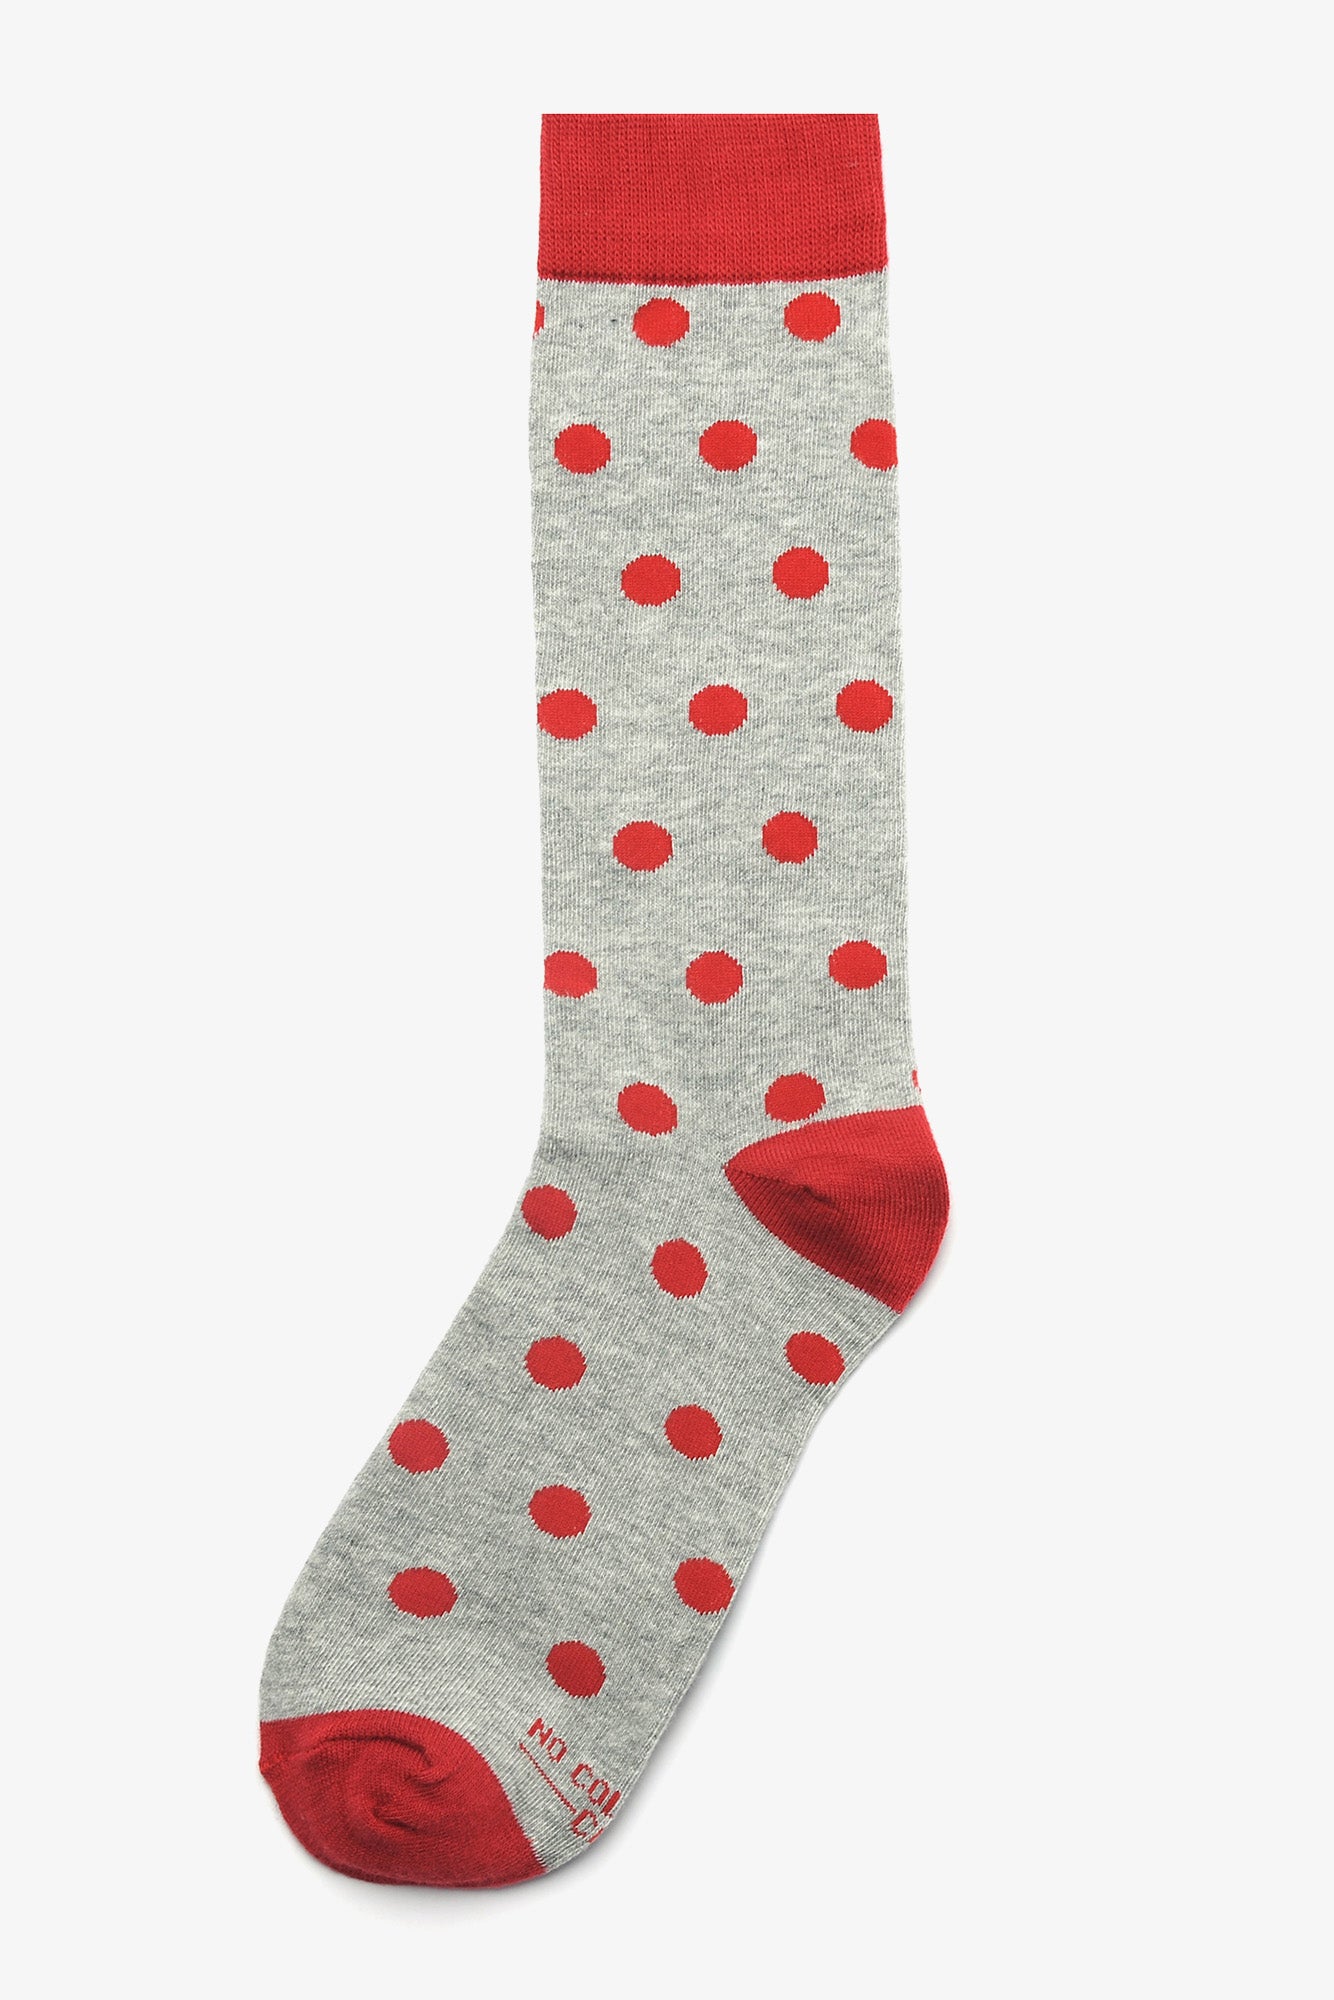 Red Polka Dot Groomsmen Socks by No Cold Feet